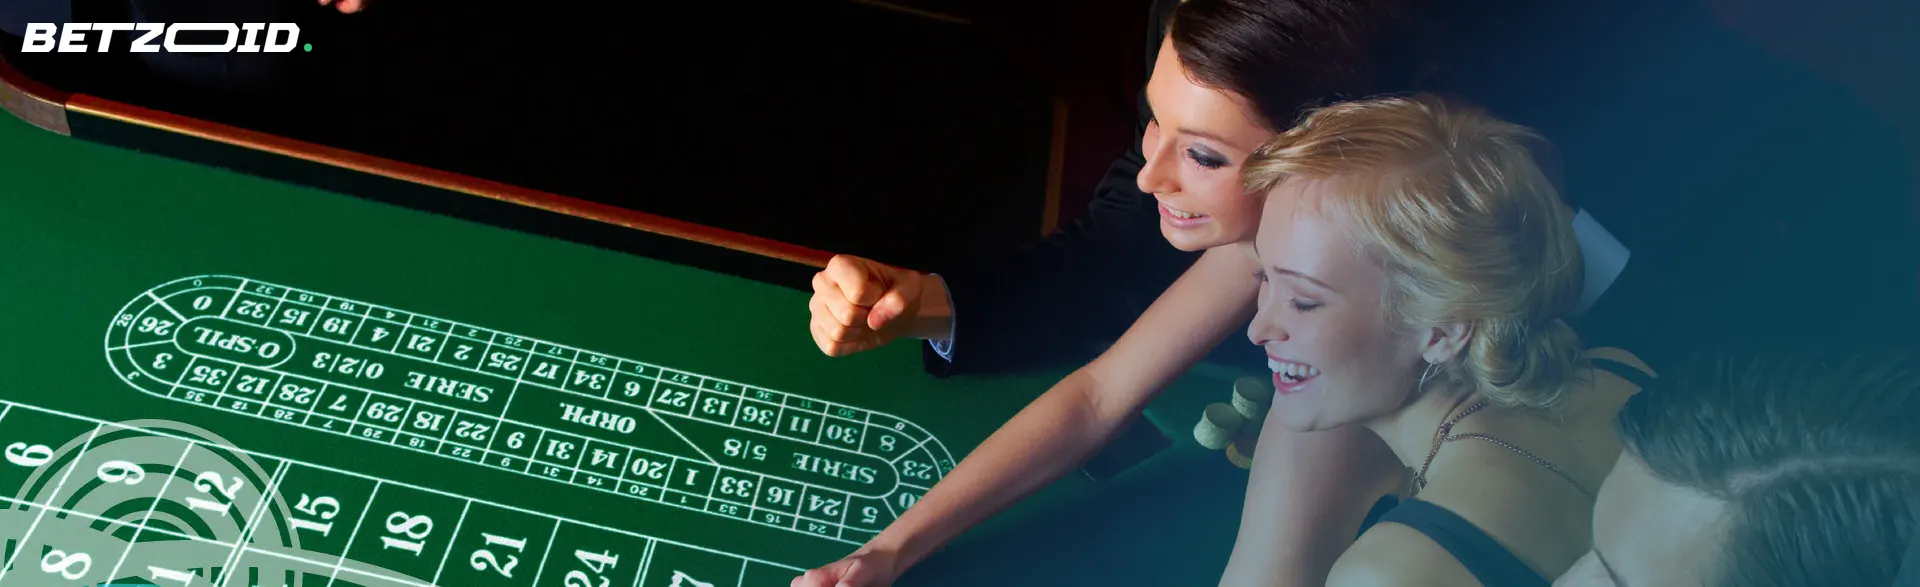 People enjoying winning at best international online casinos.